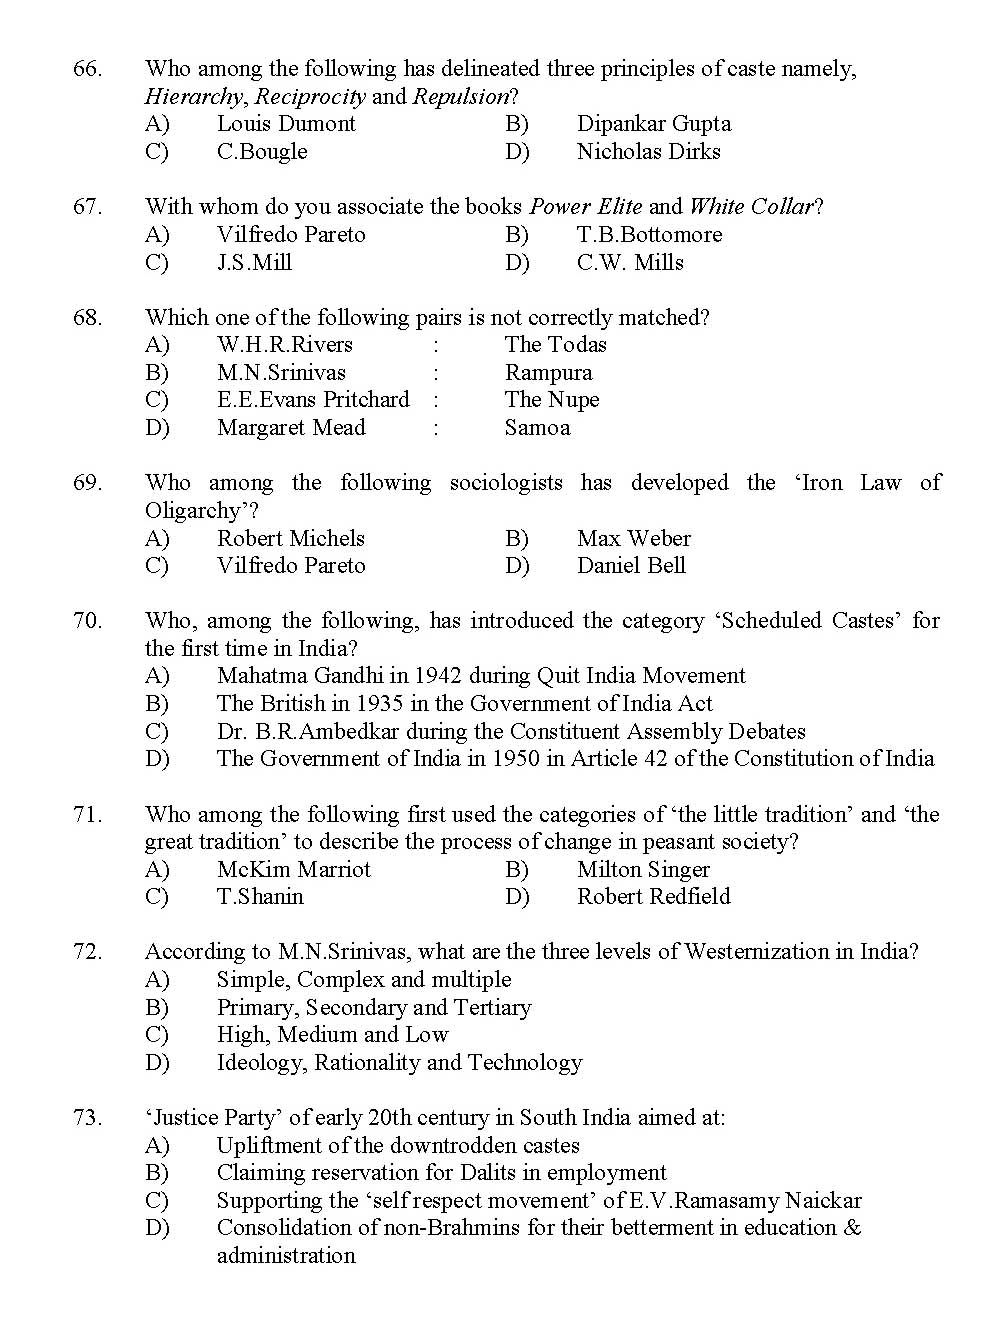 Kerala SET Sociology Exam 2012 Question Code 12930 8